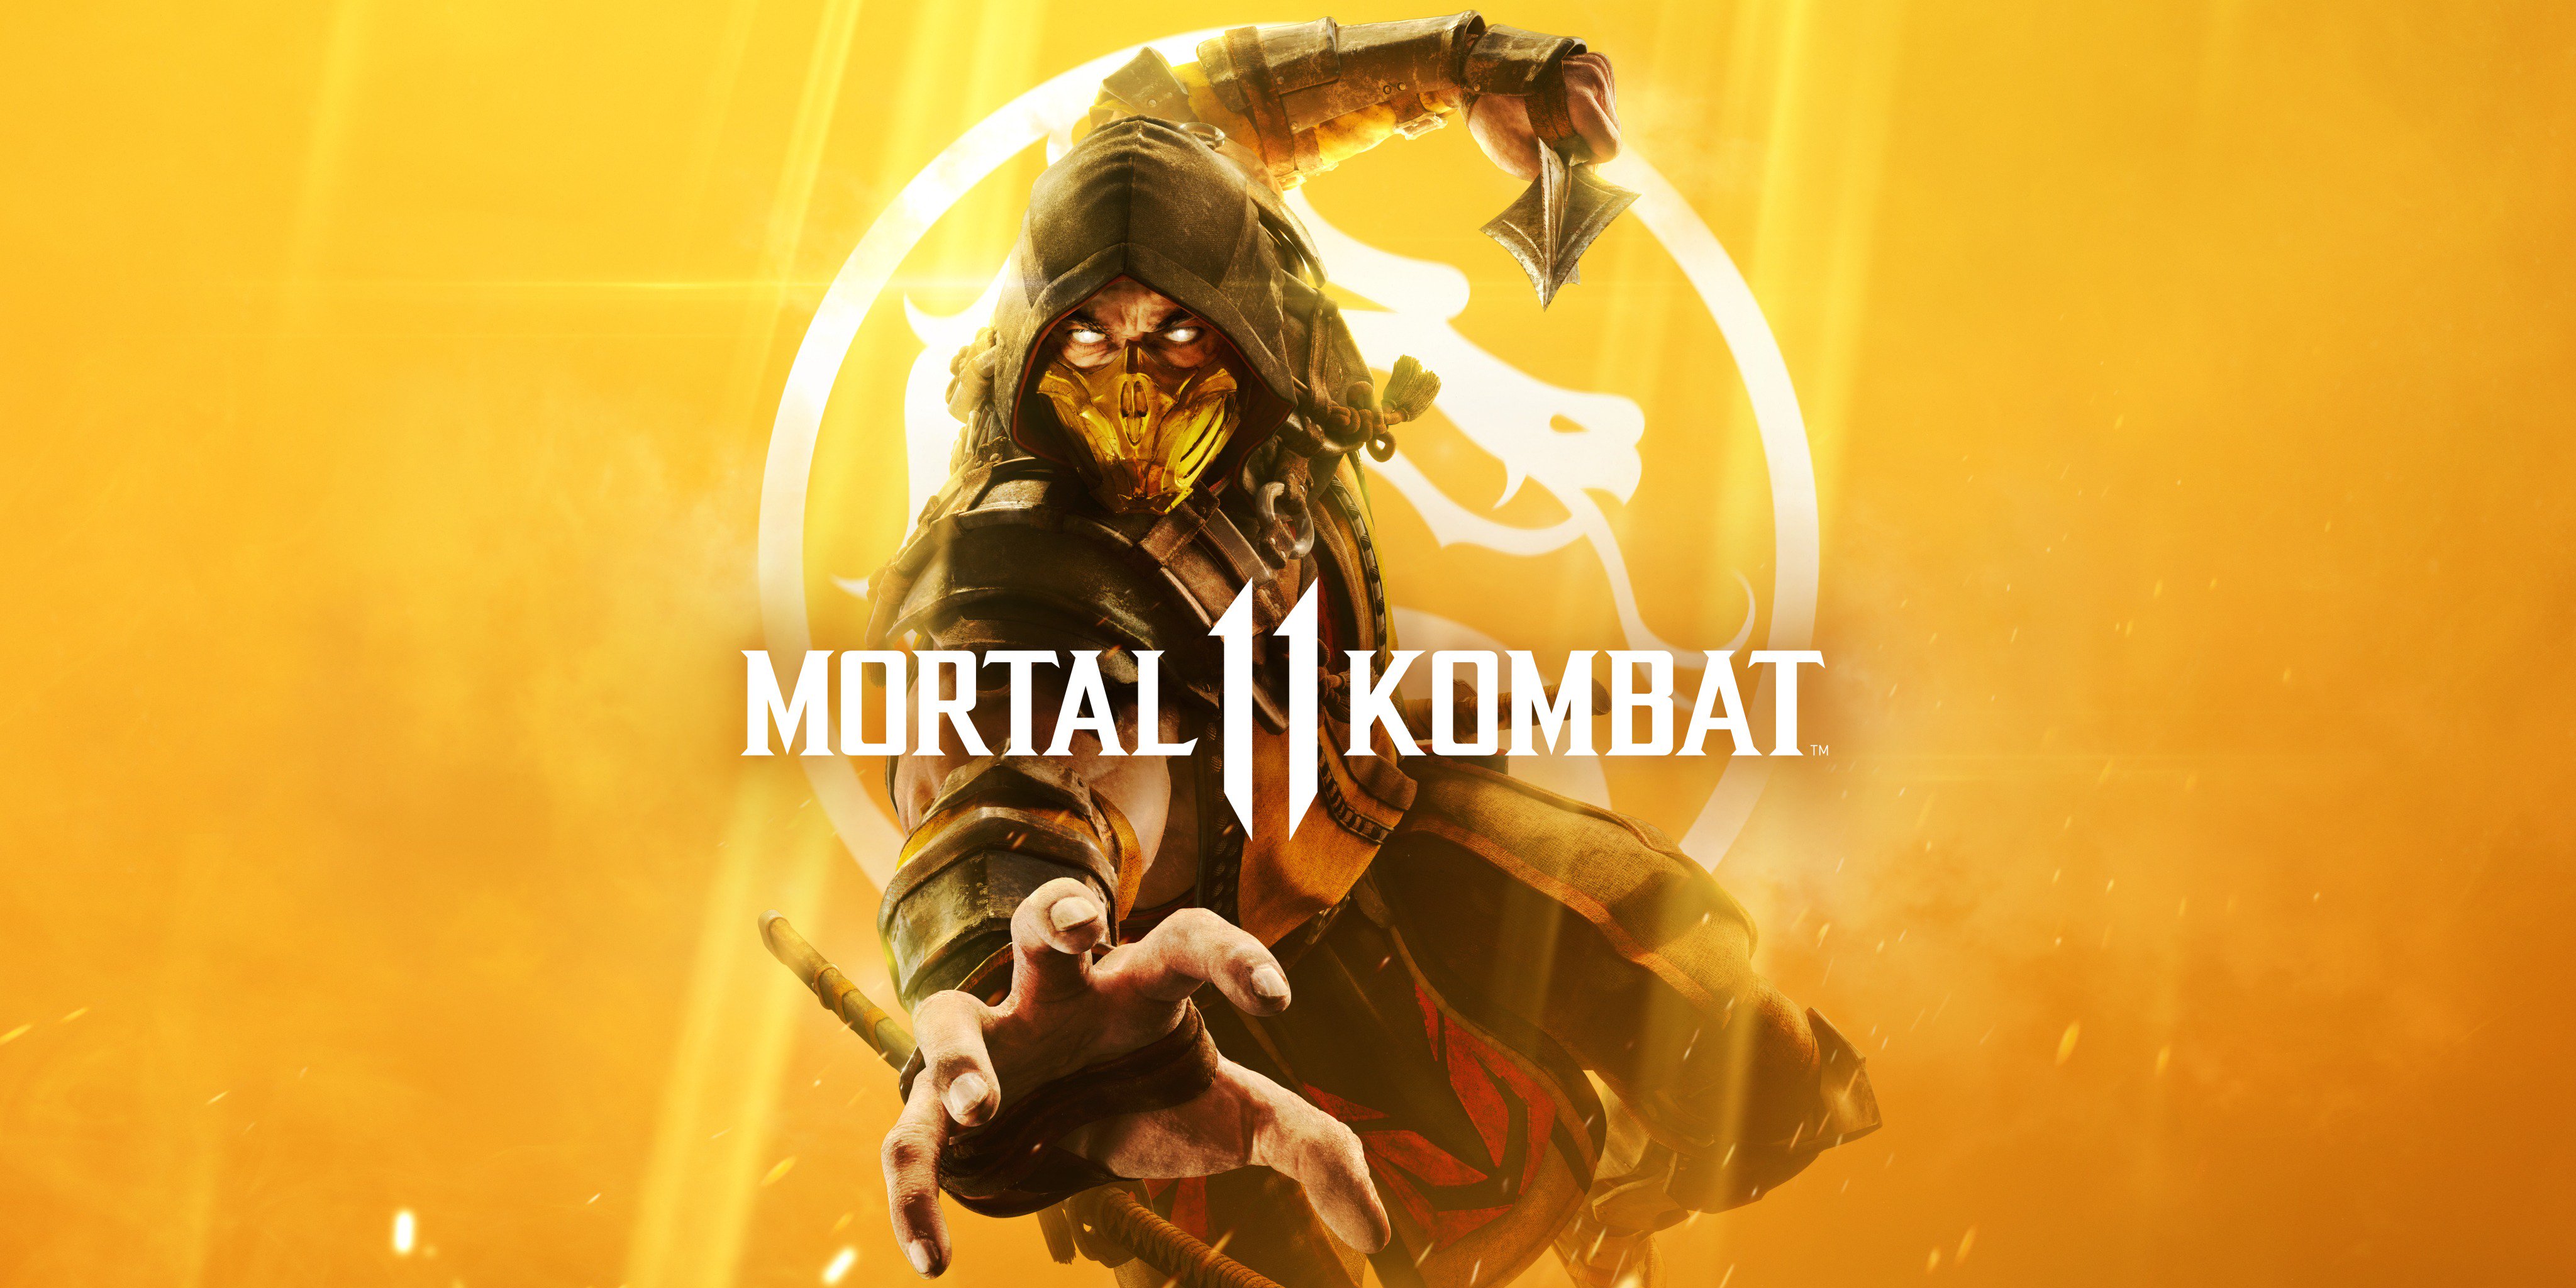 Mortal Kombat 11 ✅(Steam Ключ/GLOBAL)+ПОДАРОК